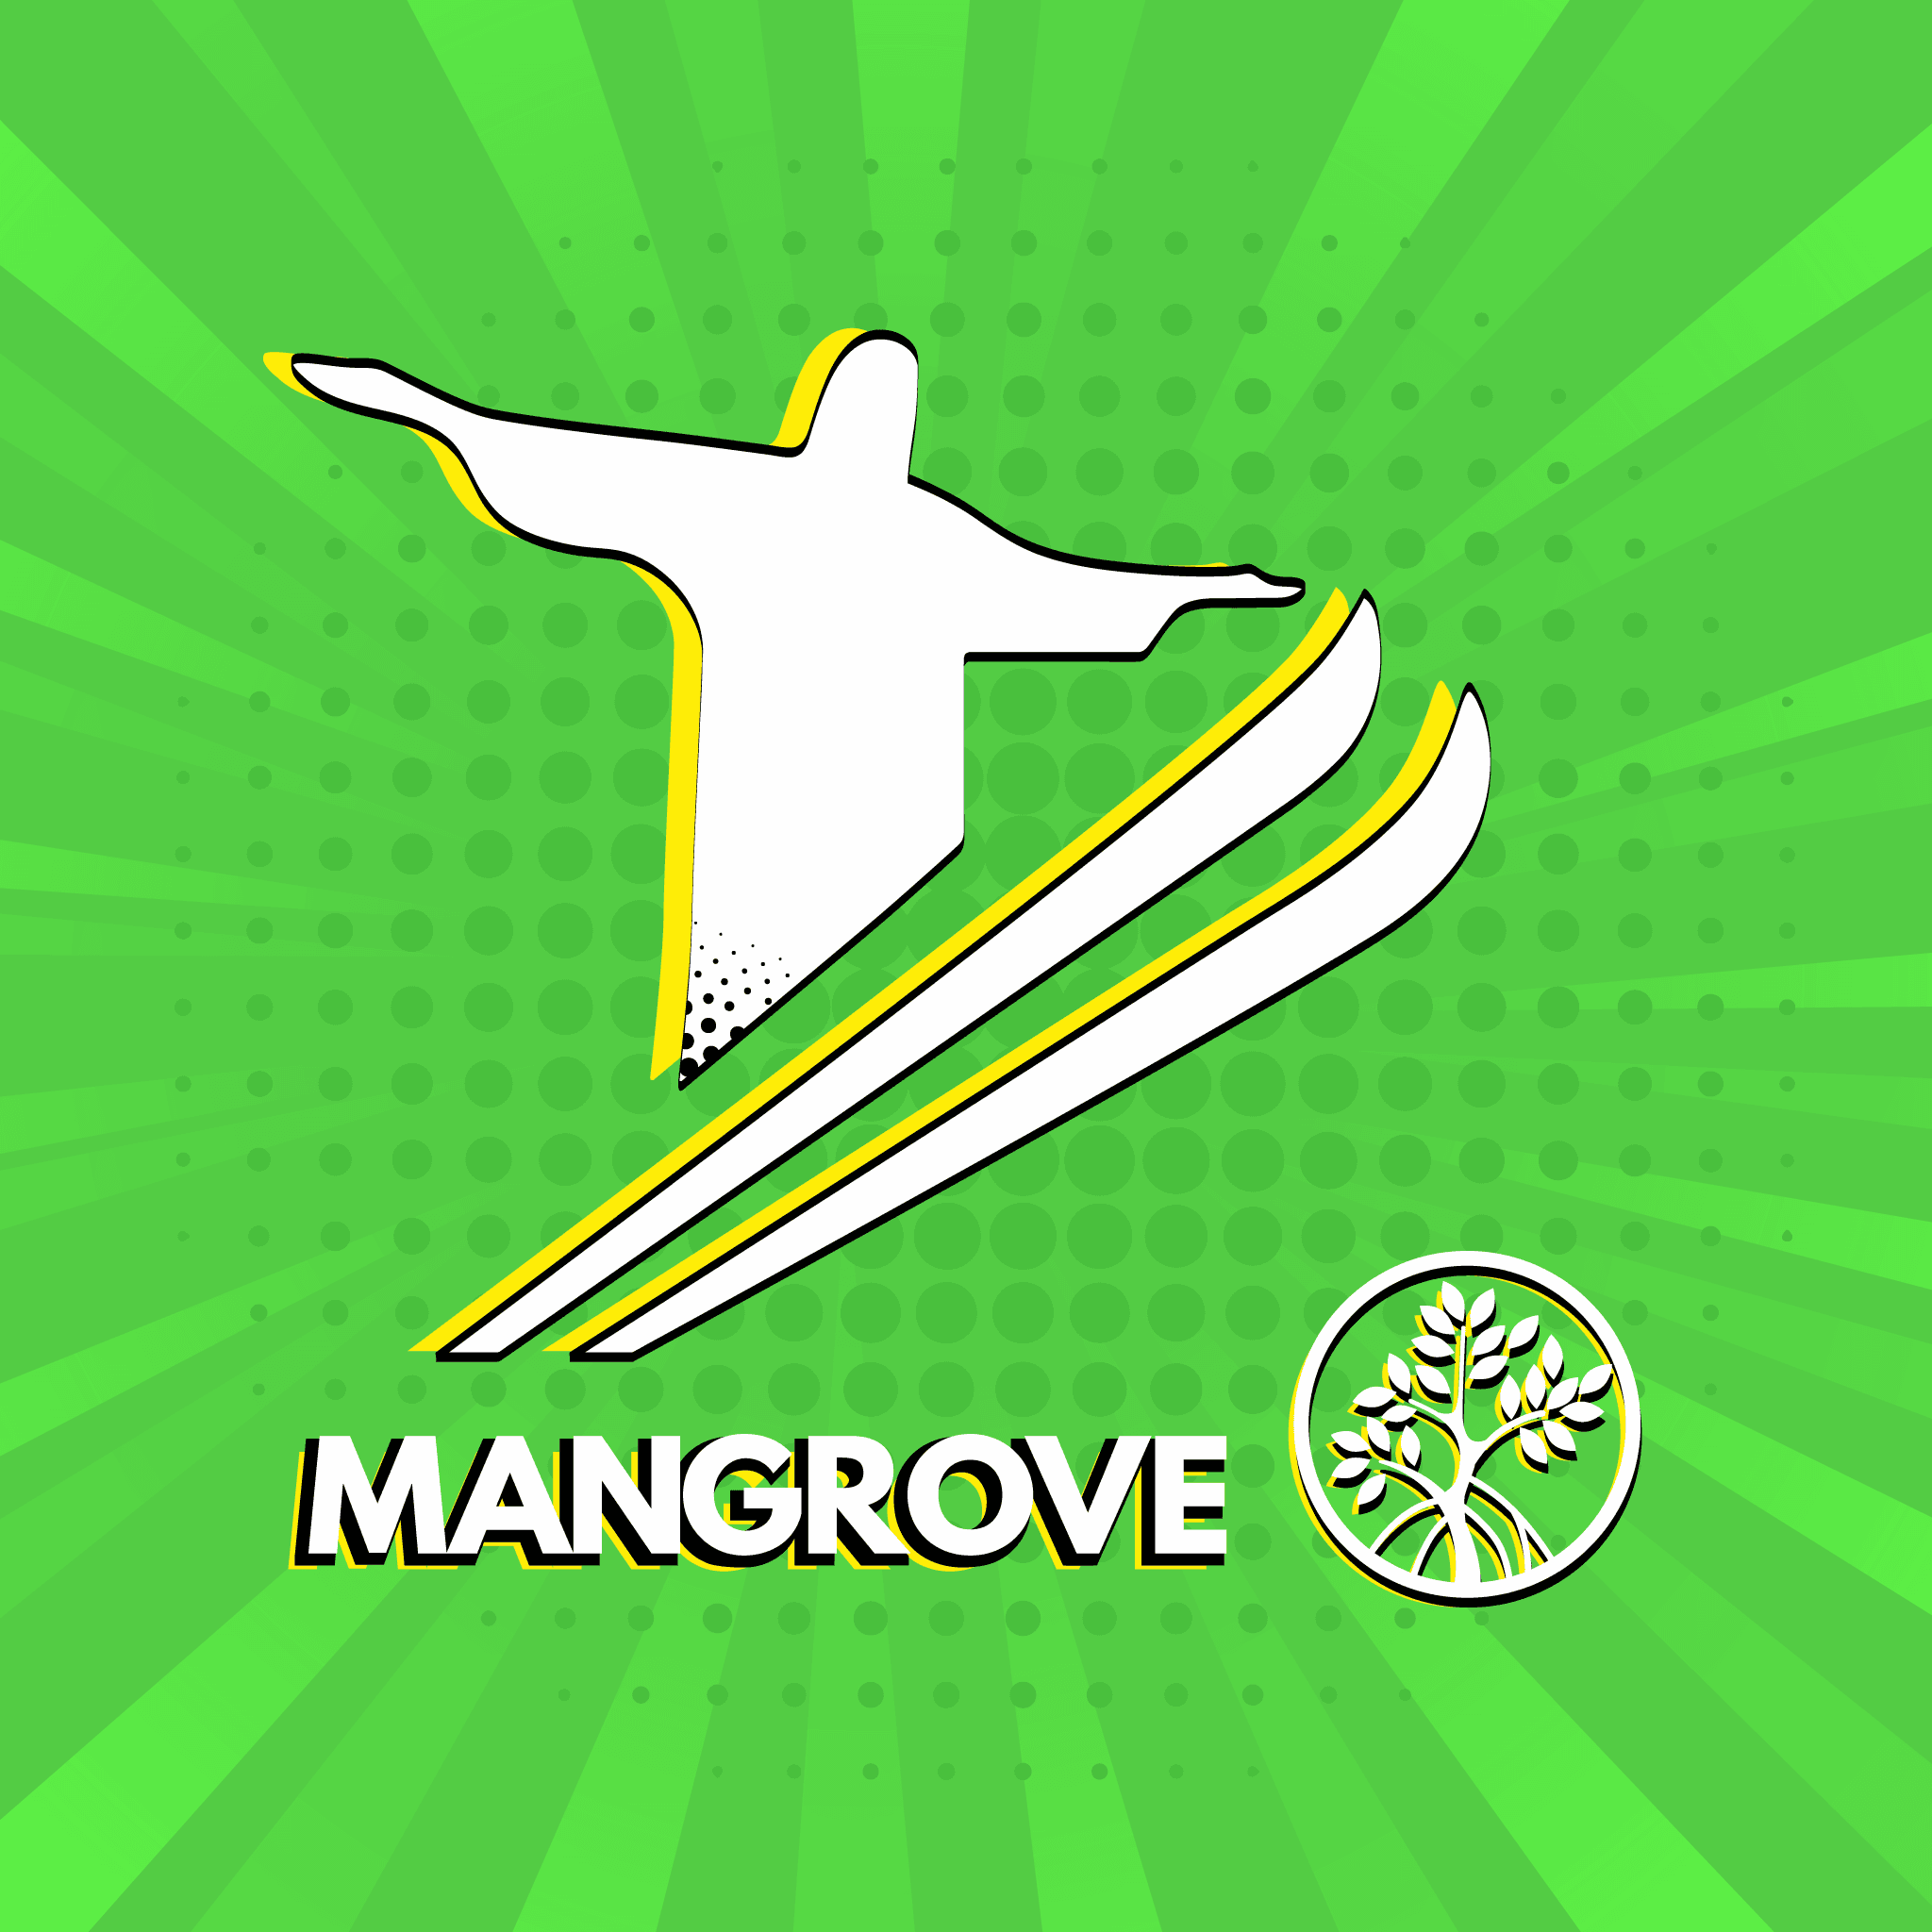 Braskicup Mangrove